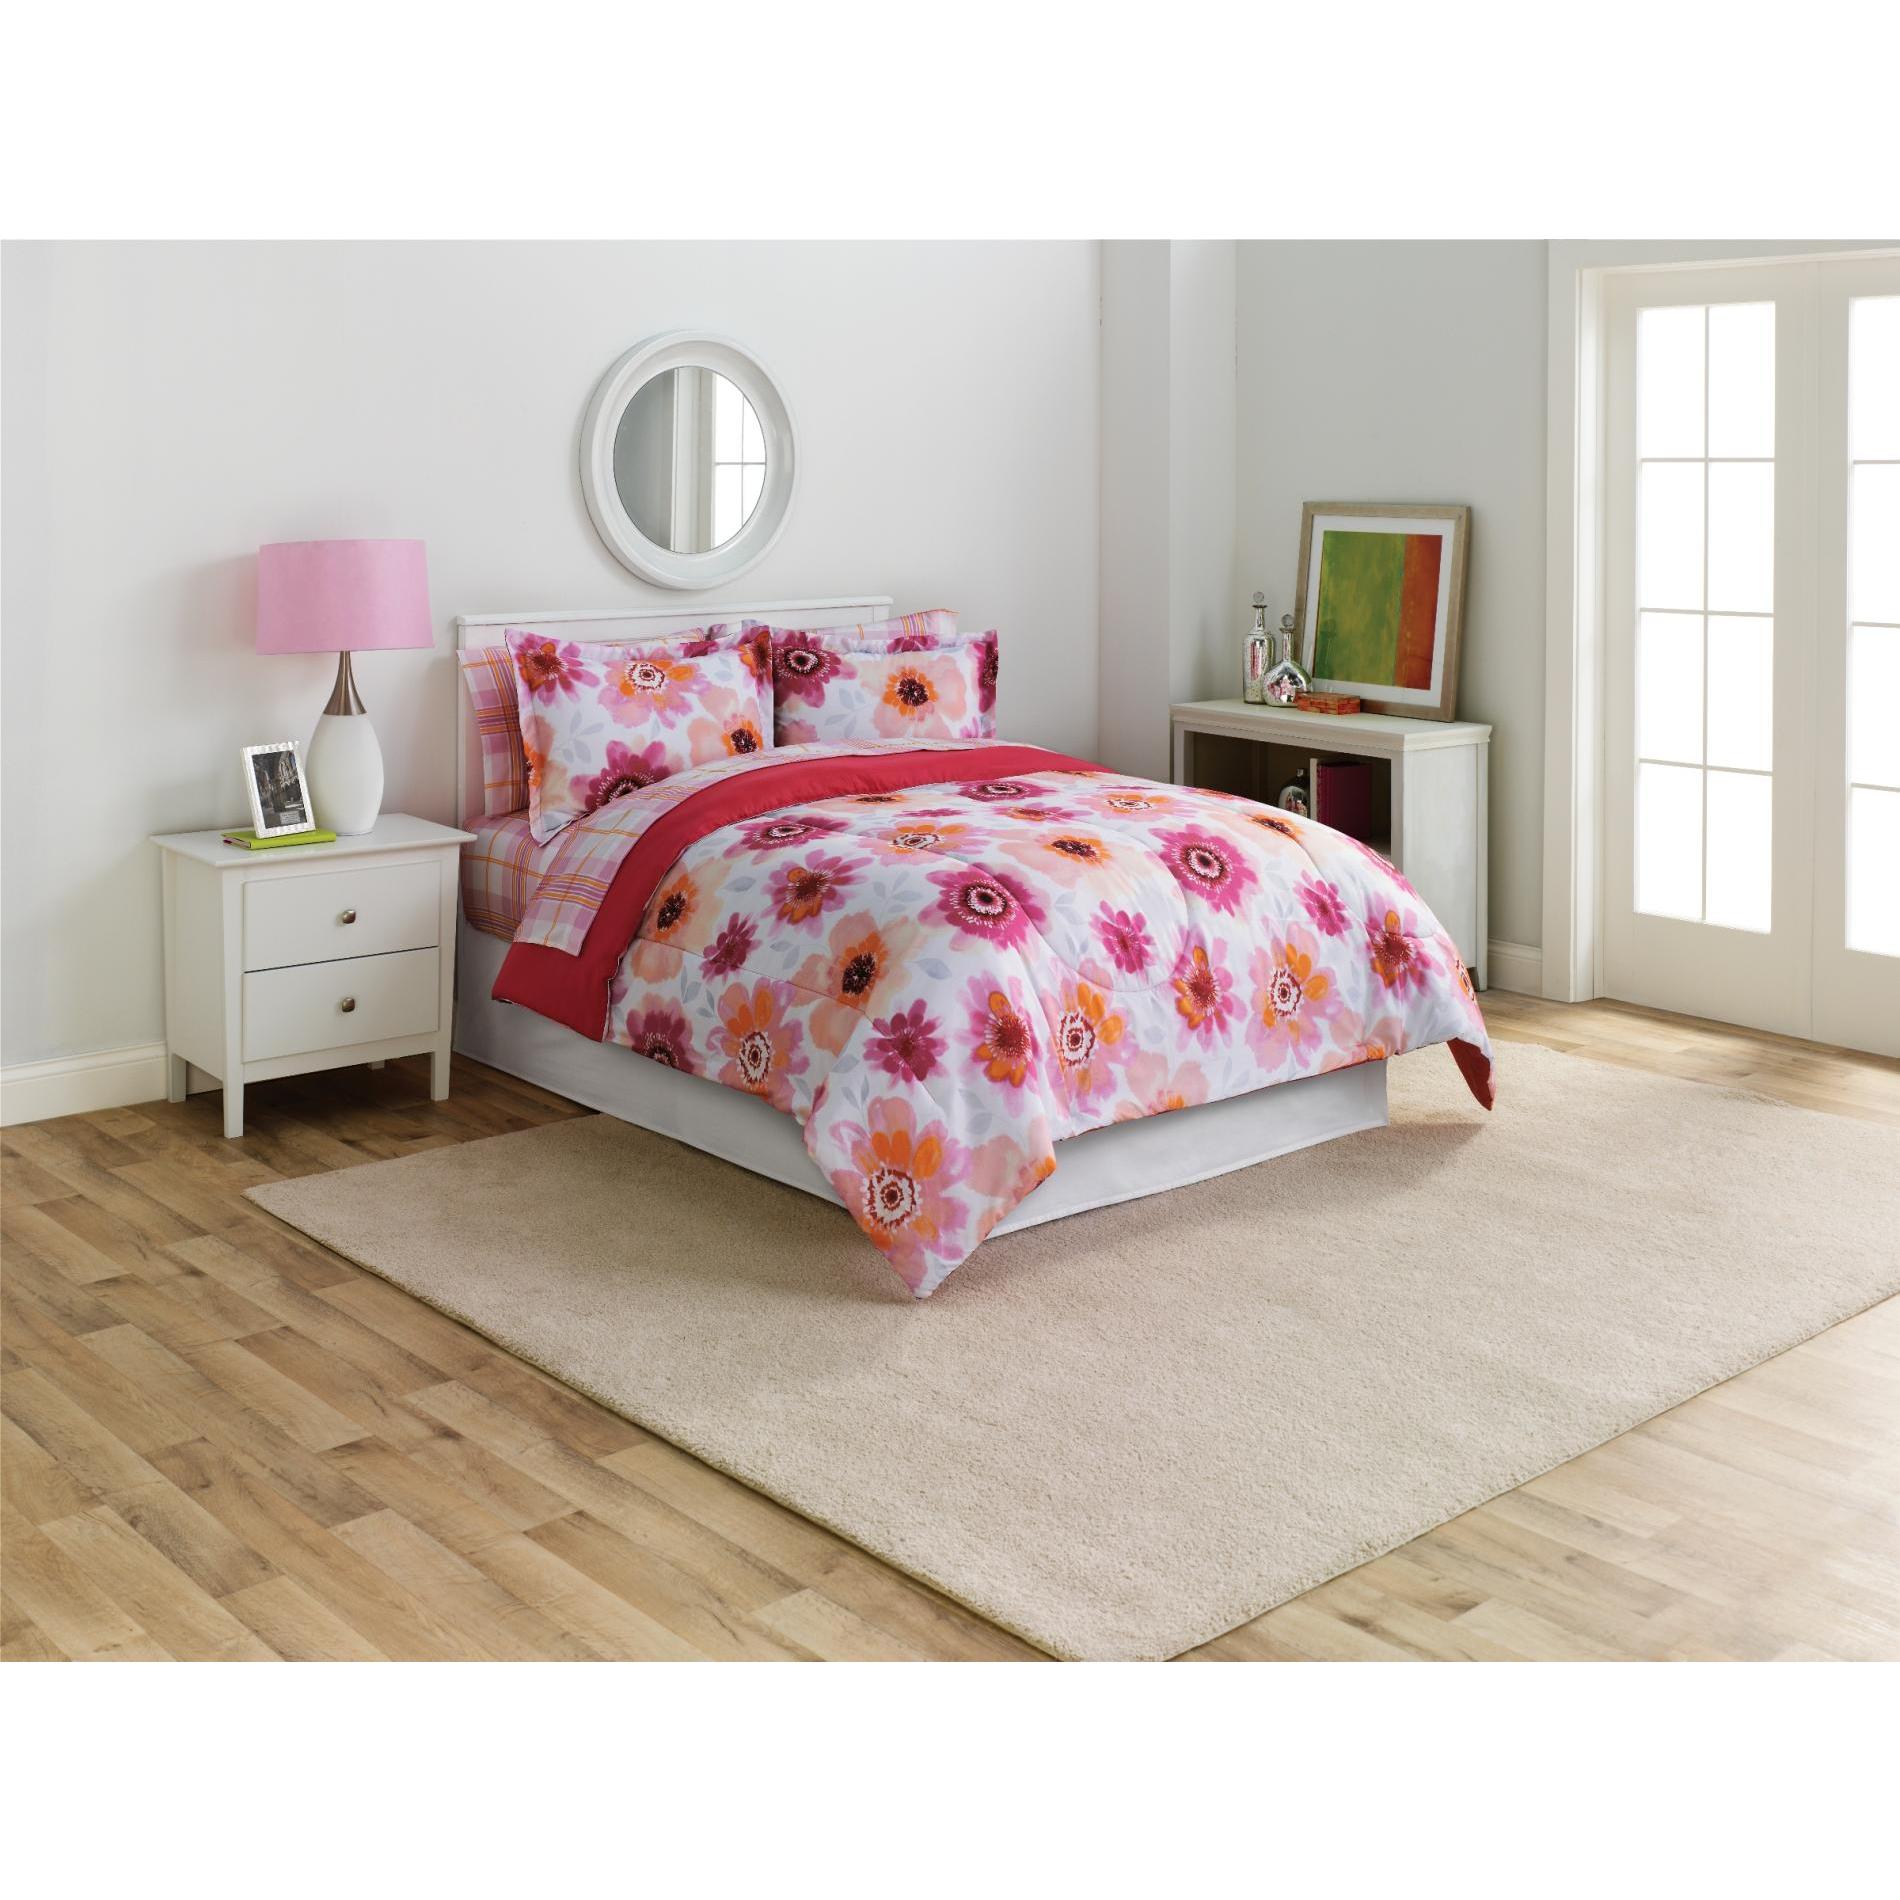 Essential Home microfiber comforter set - Bright Floral